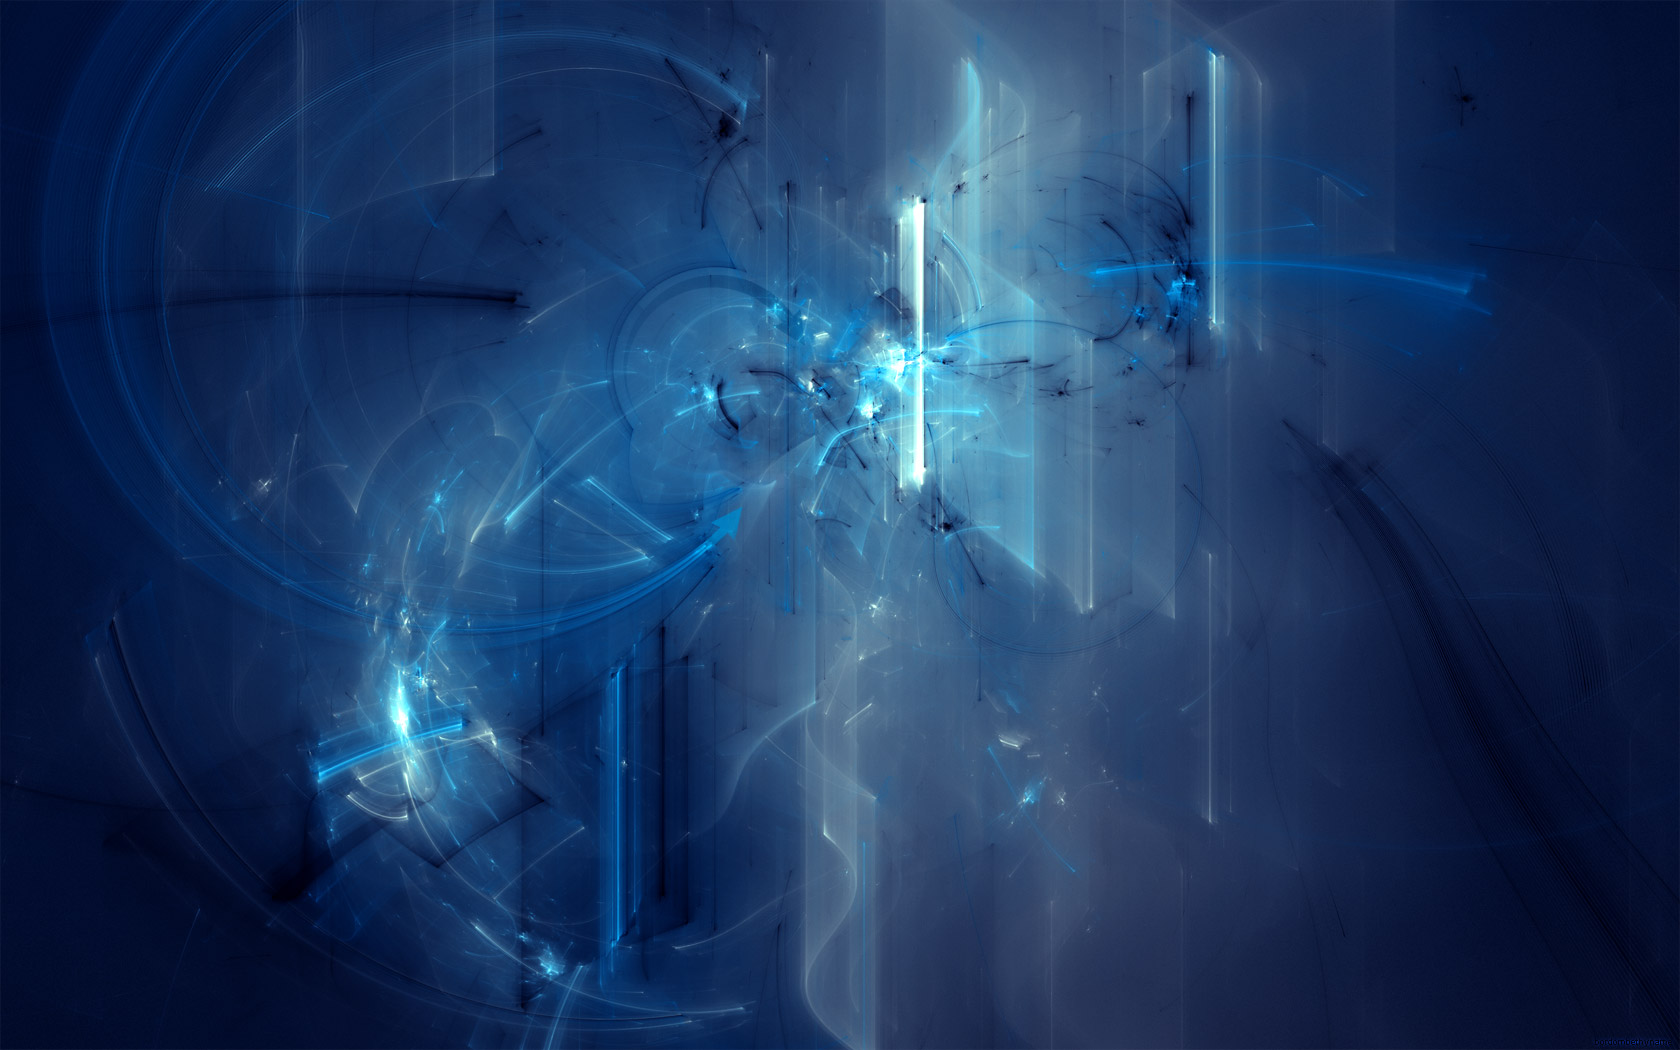 Abstrait Bleu Fond d'écran HD | Image